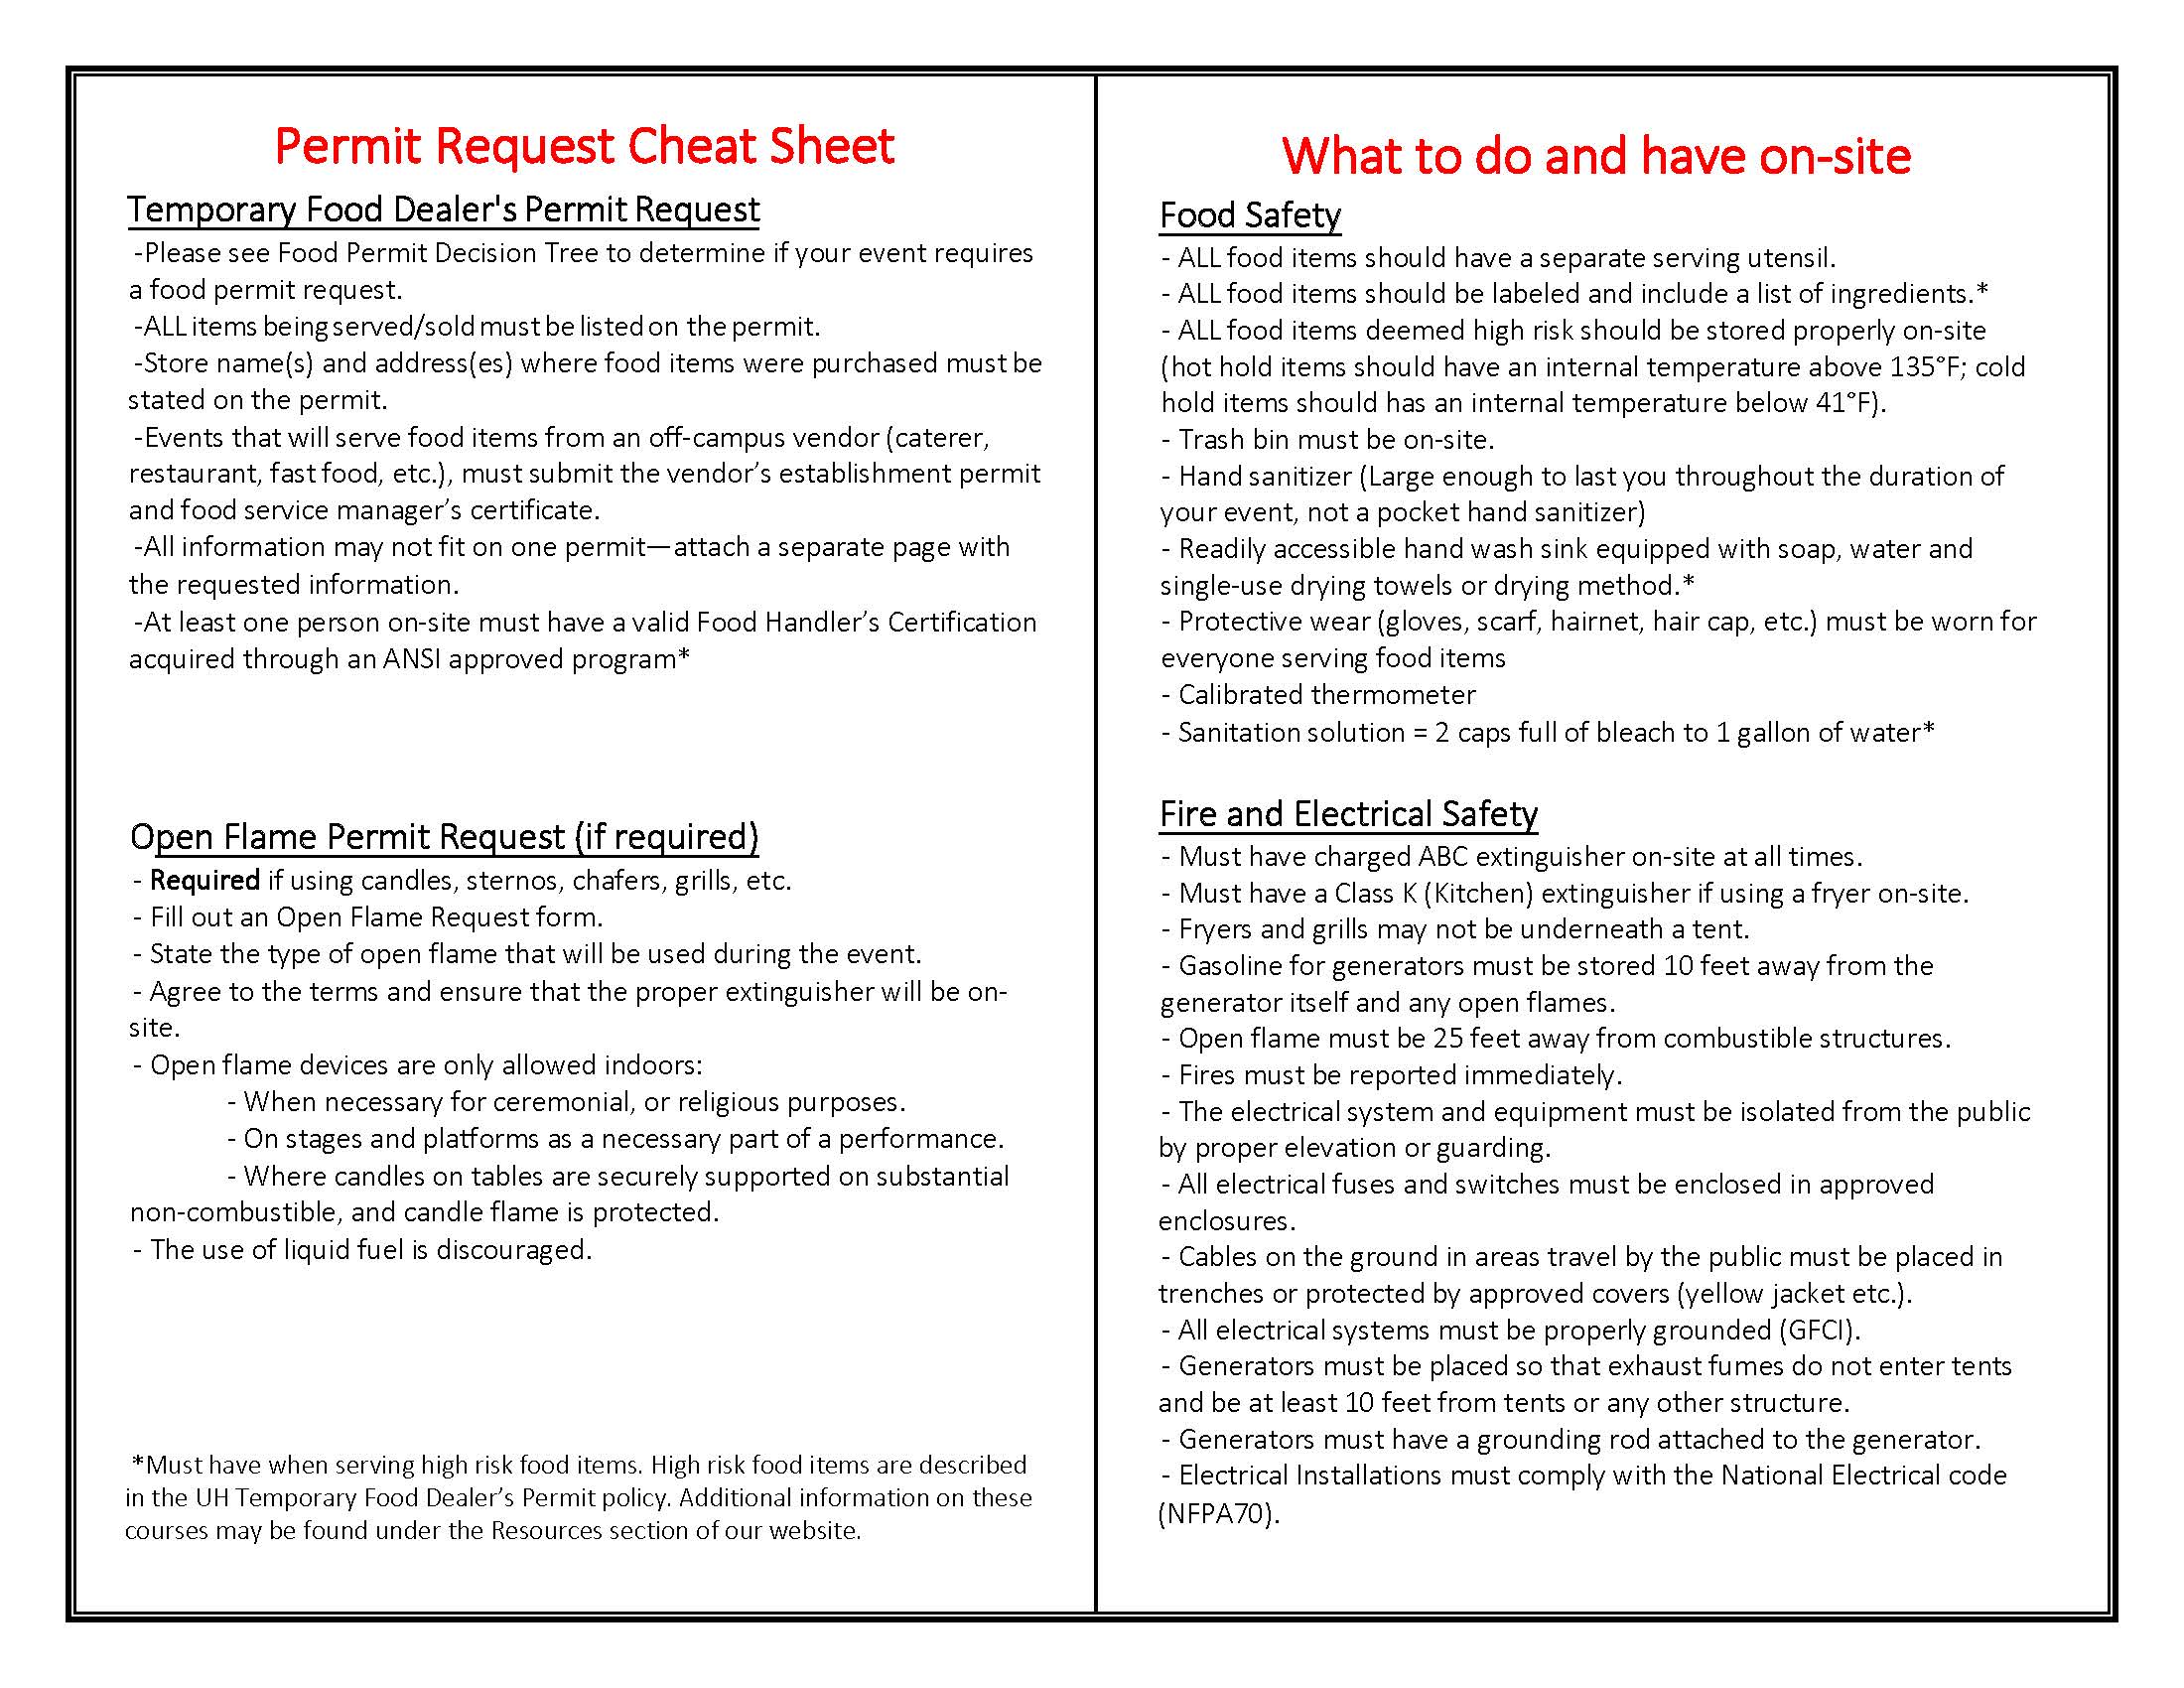 food-permit-cheat-sheet-revised.jpg